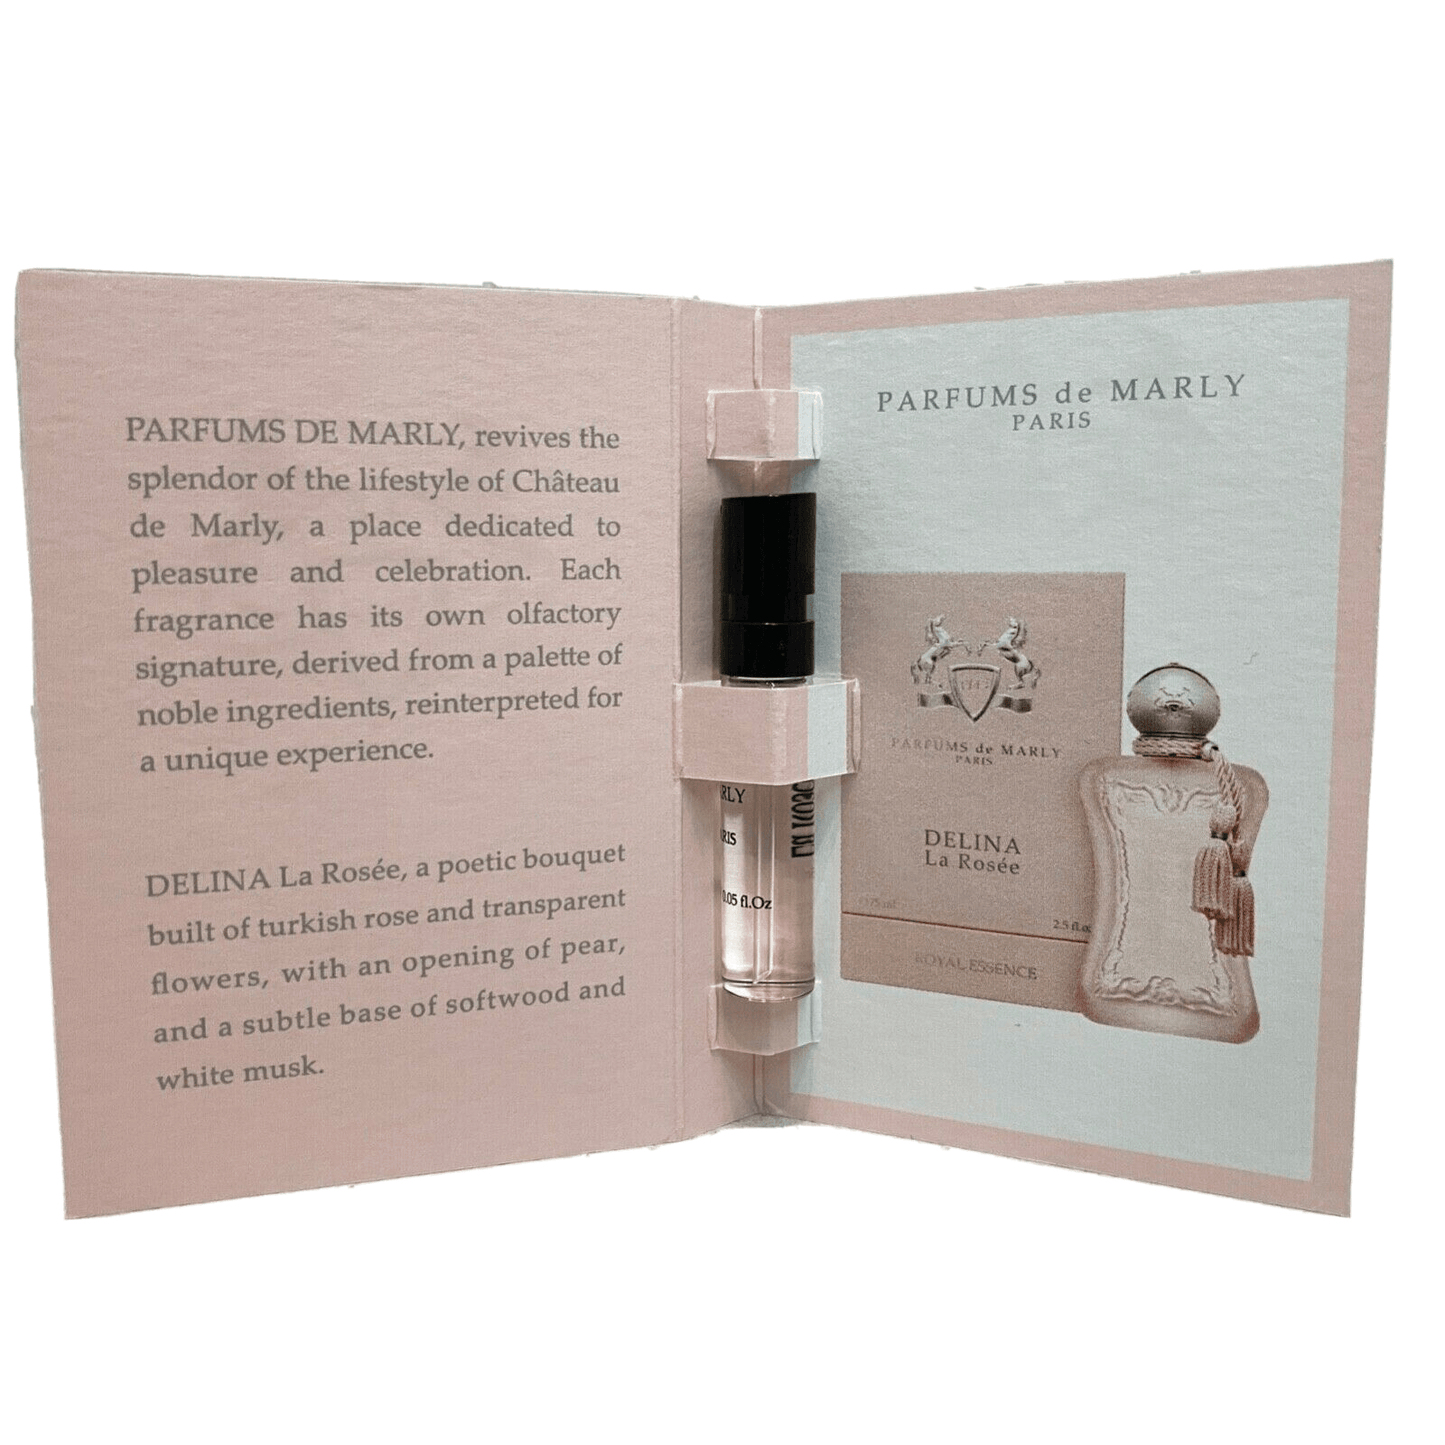 Parfums De Marly Delina La Rosee oficjalna próbka perfum 1.5 ml 0.05 fl. uncja